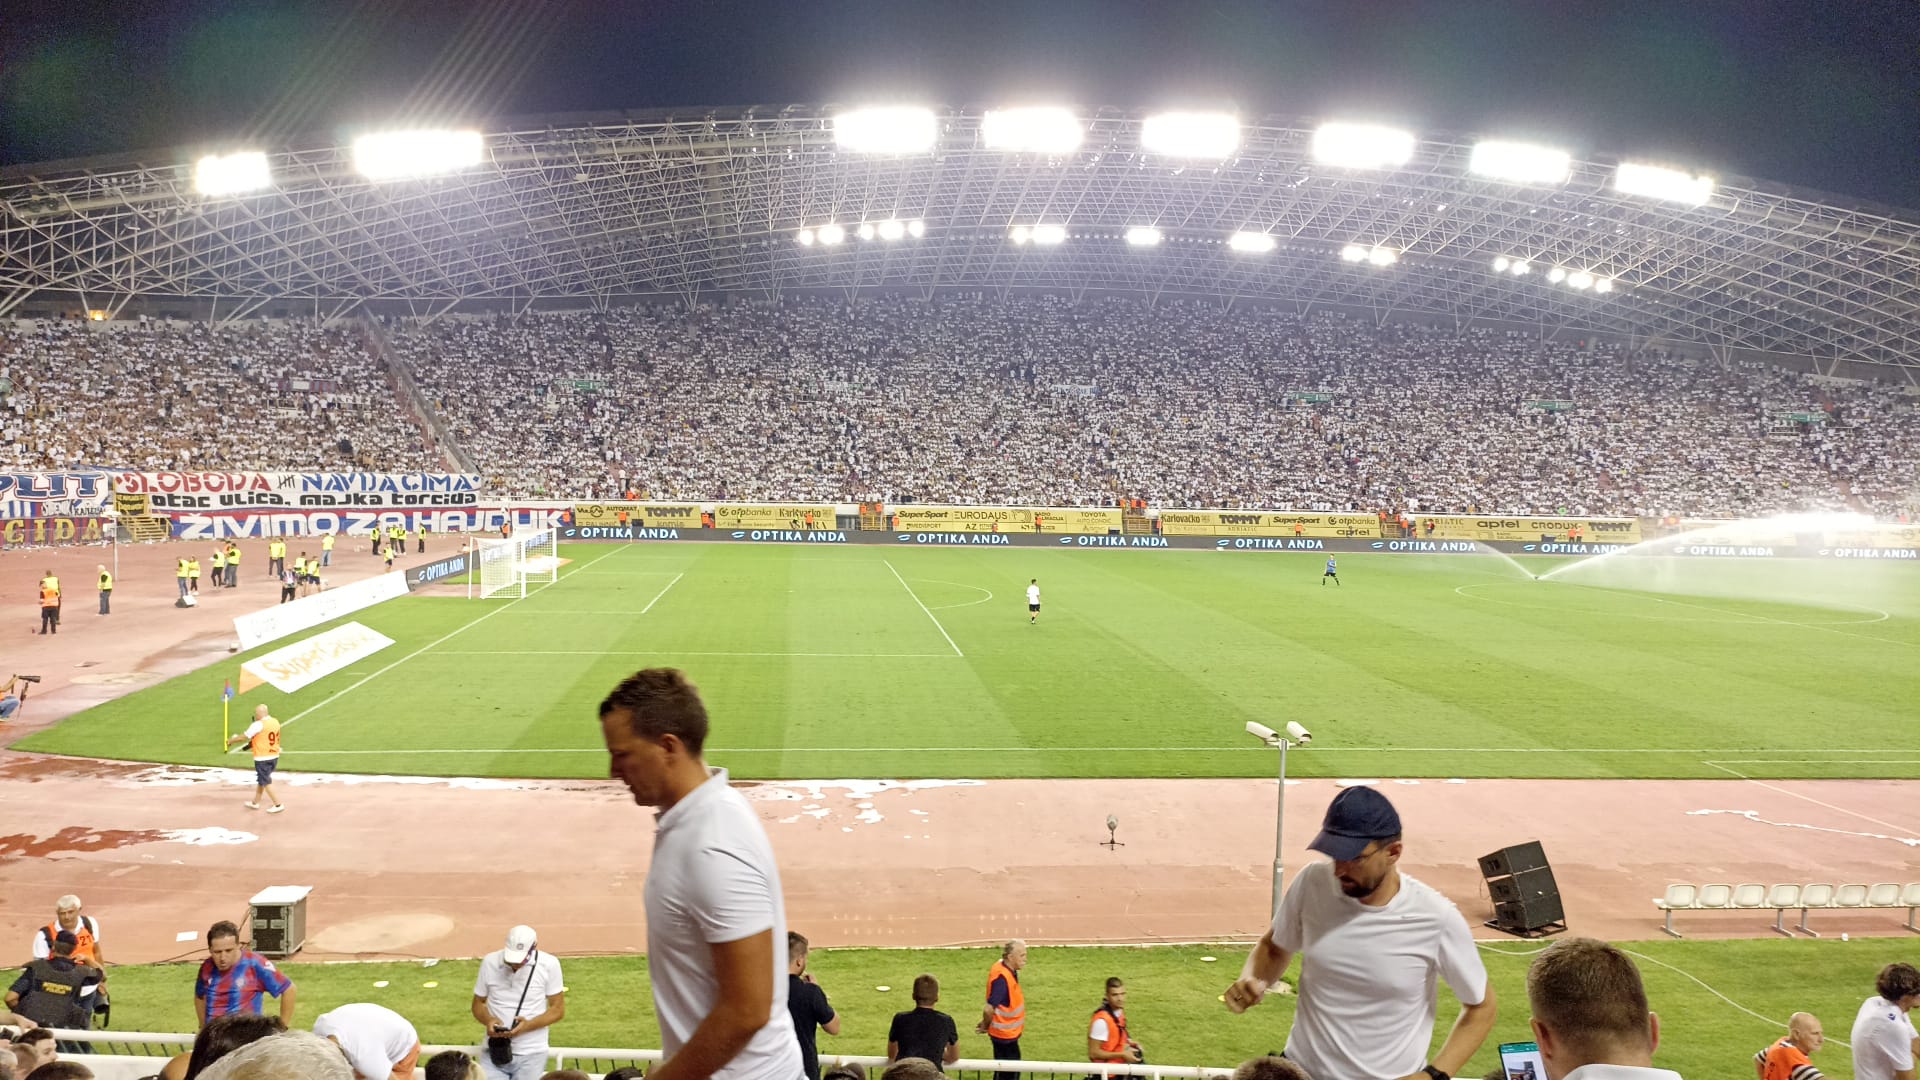 FIFA 22, Hajduk Split vs Atlético de Madrid - Stadion Hanguk